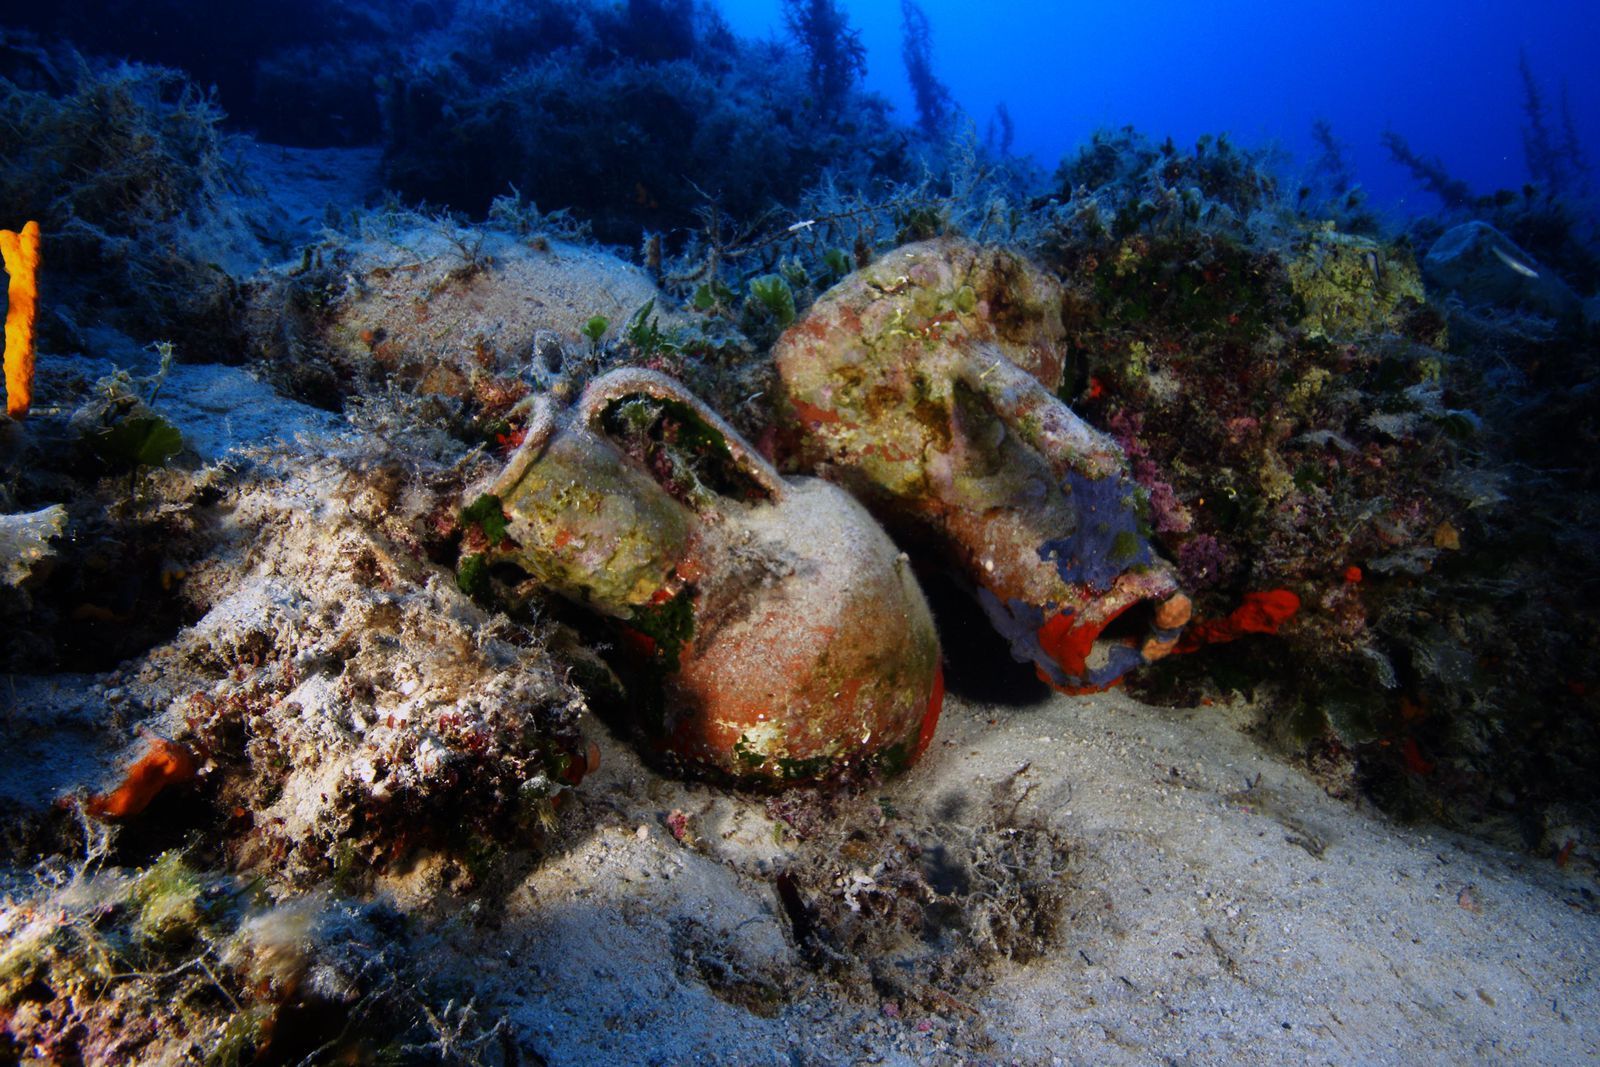 Amphora in reef